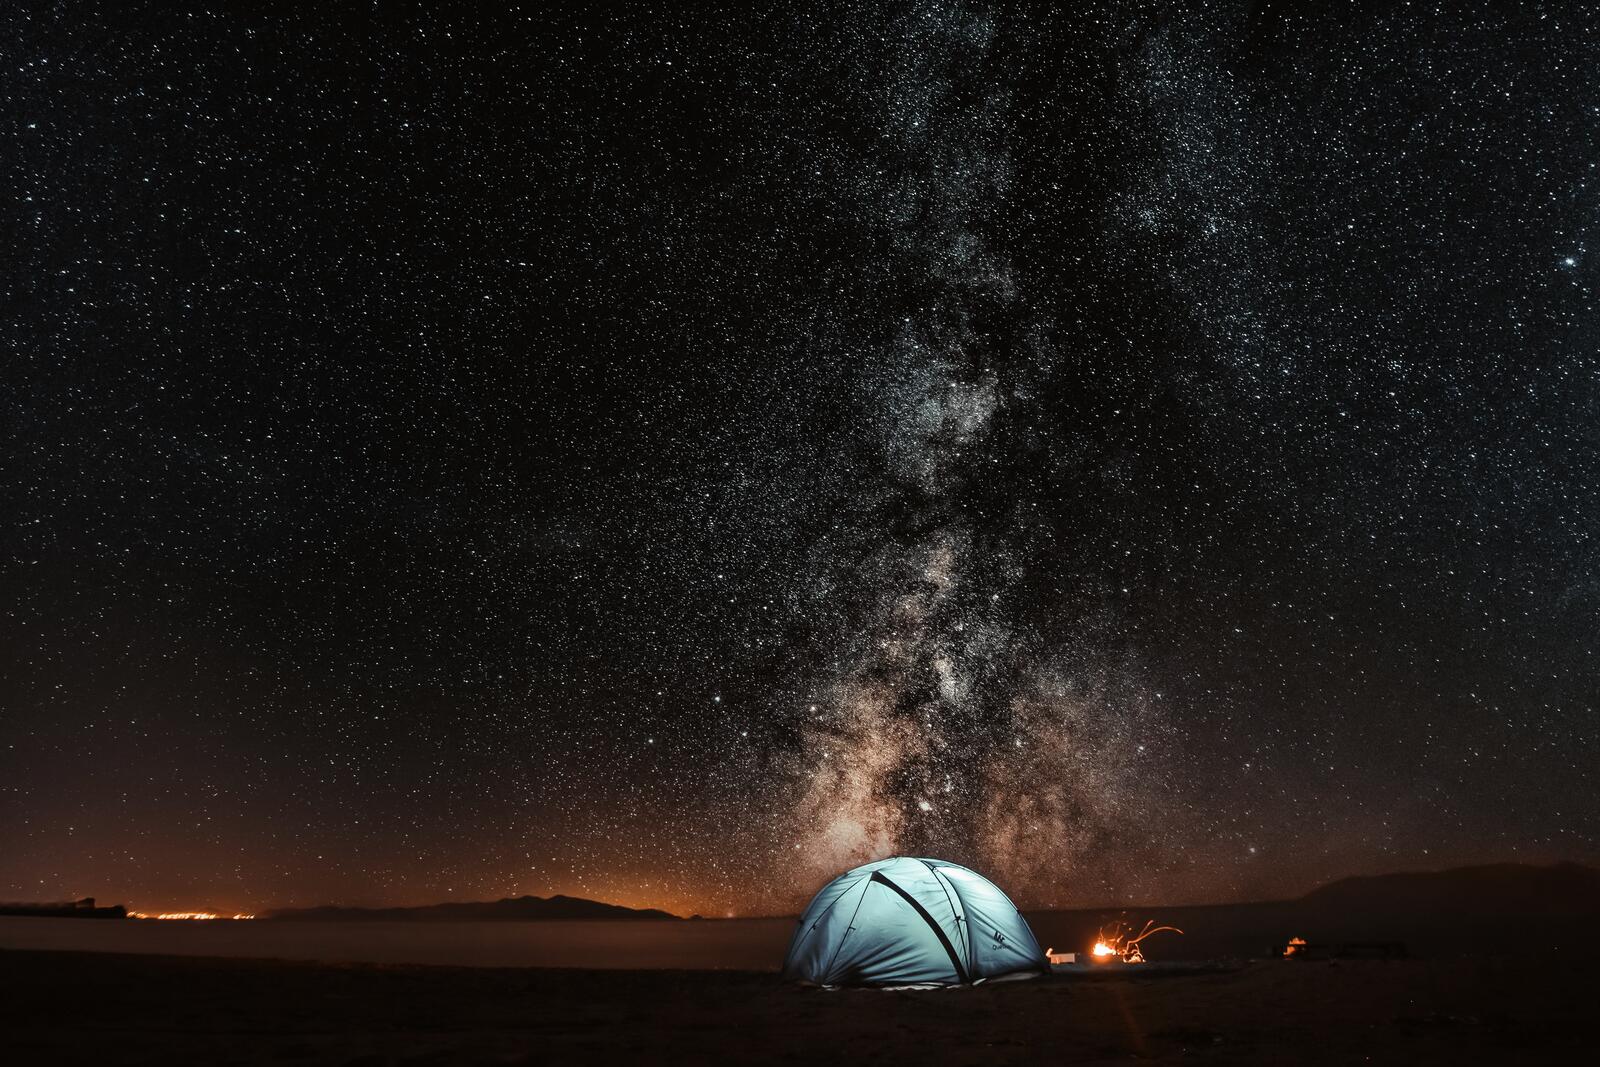 Бесплатное фото Палатка и звездное небо